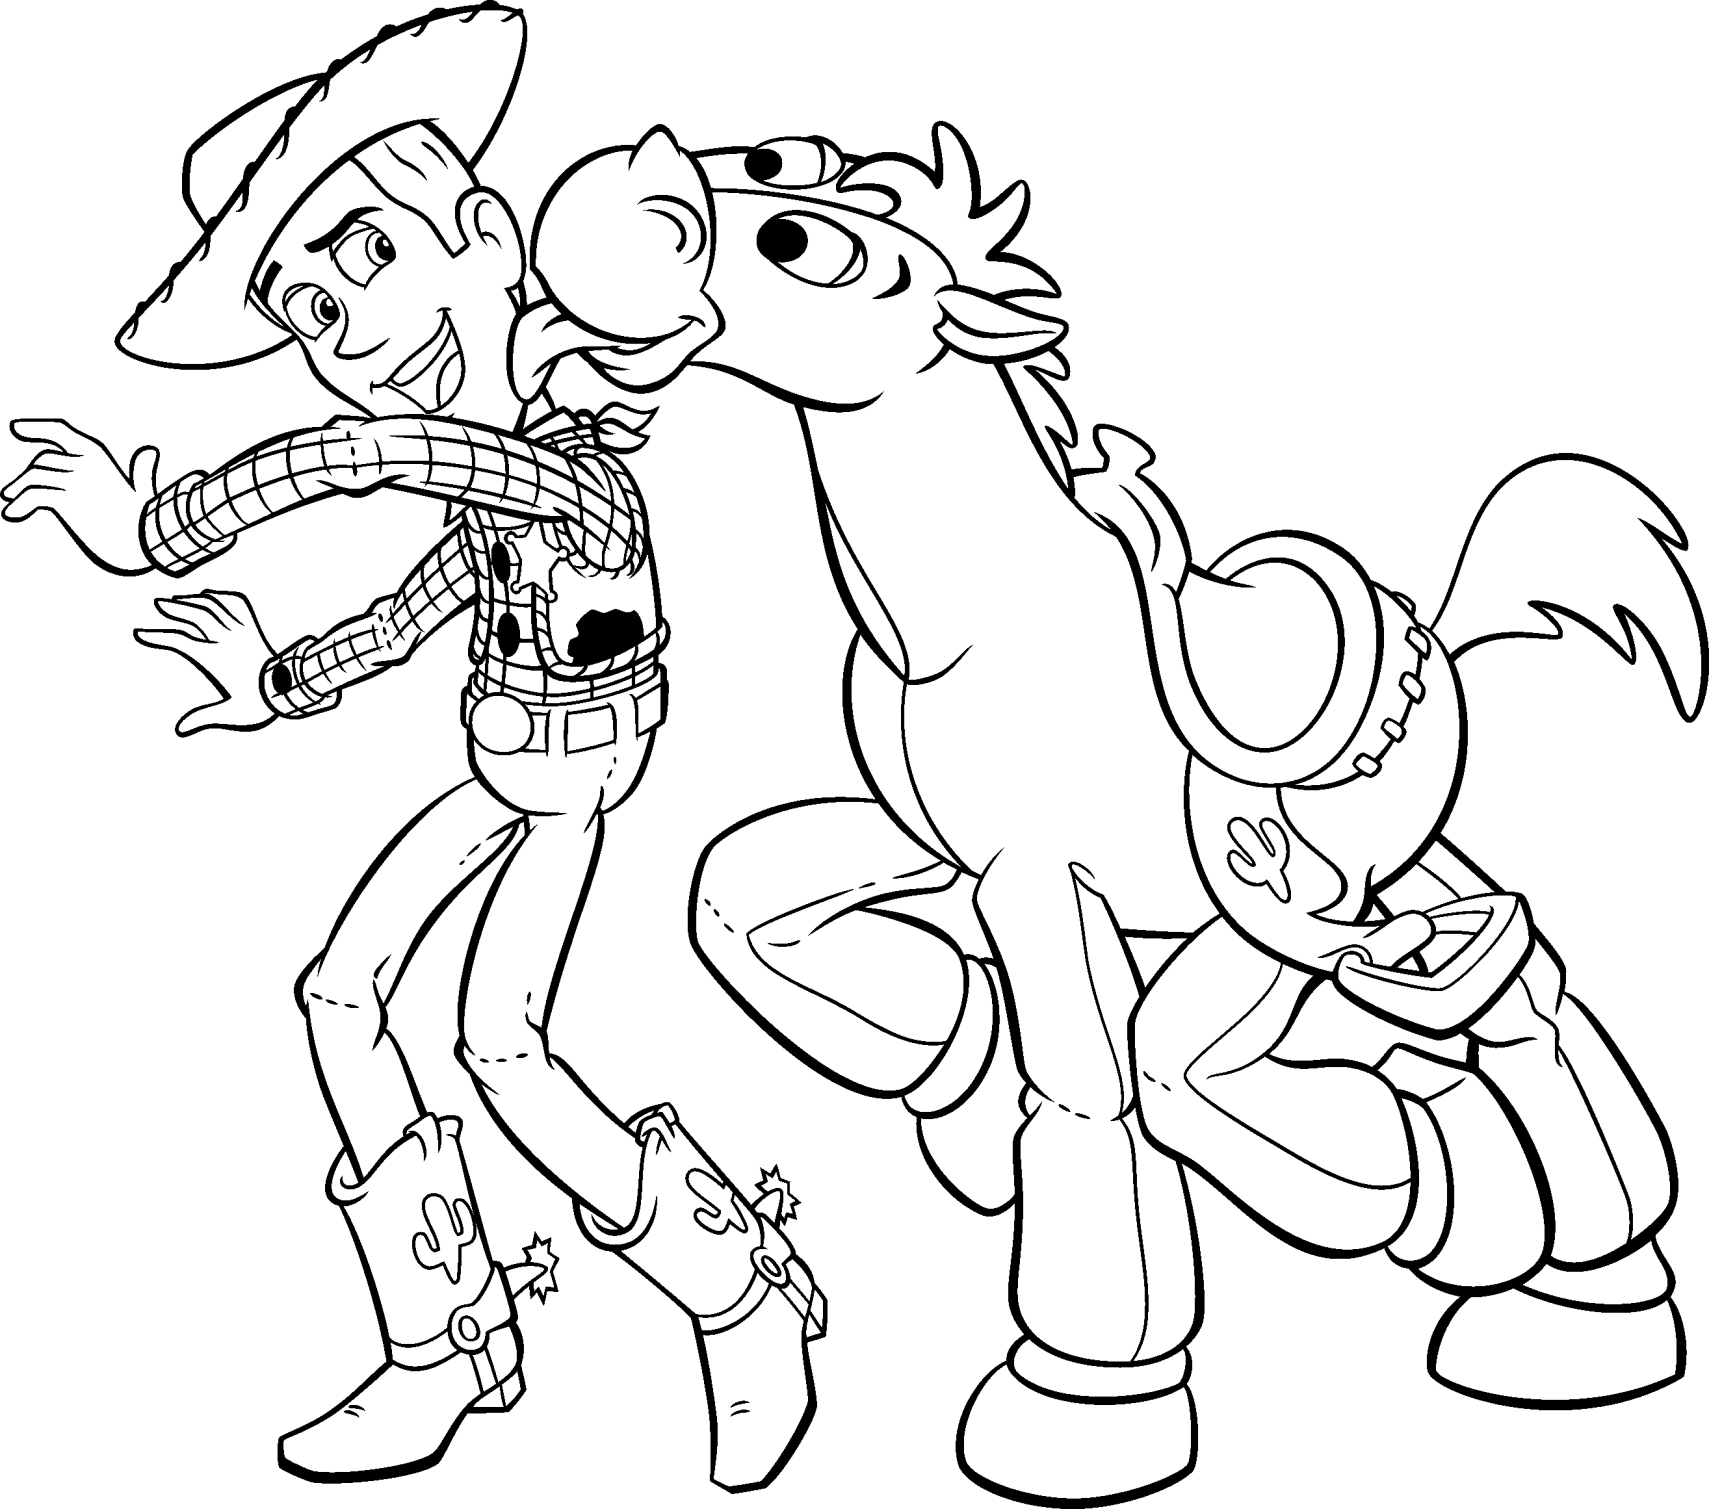 Woody e Bullseye de Toy Story